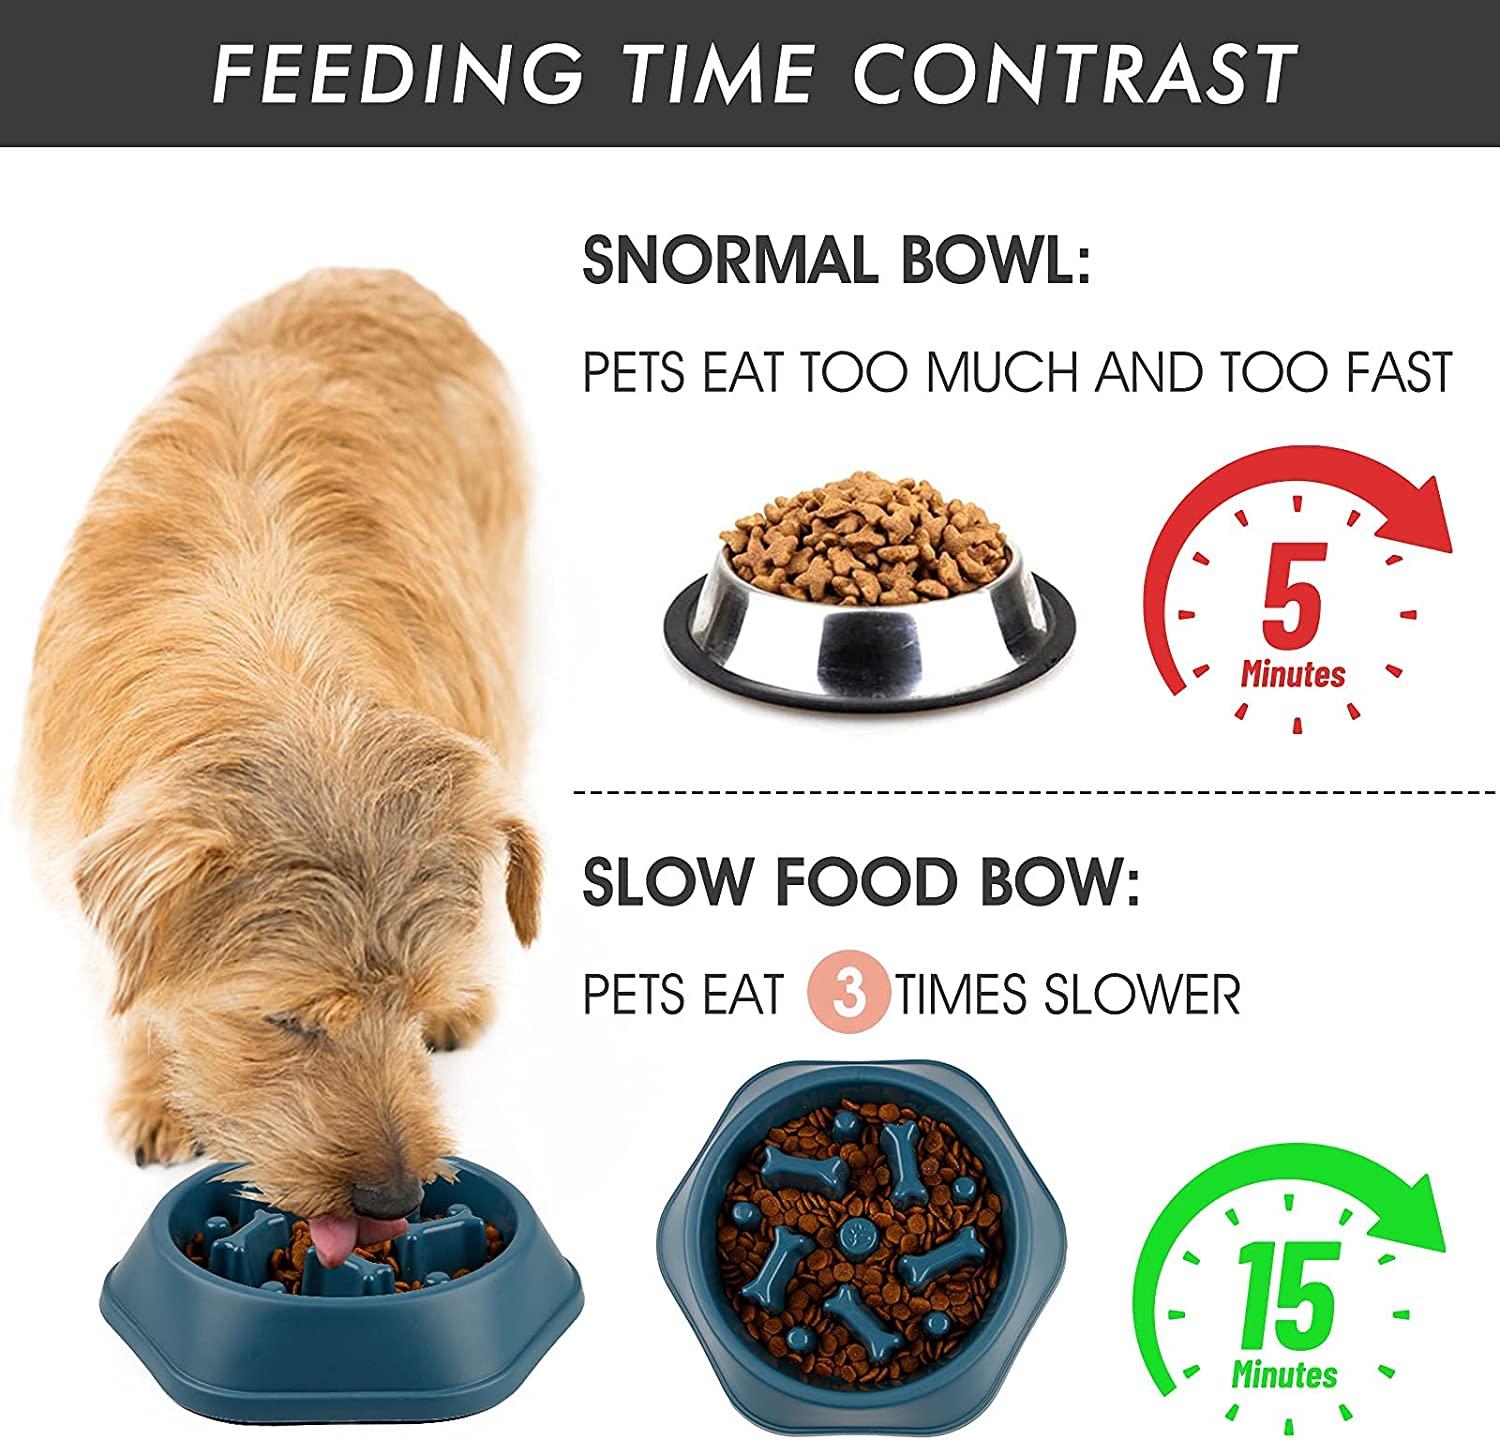 Frisco Non-Skid Slow Feeder Dog & Small Pet Bowl, Black